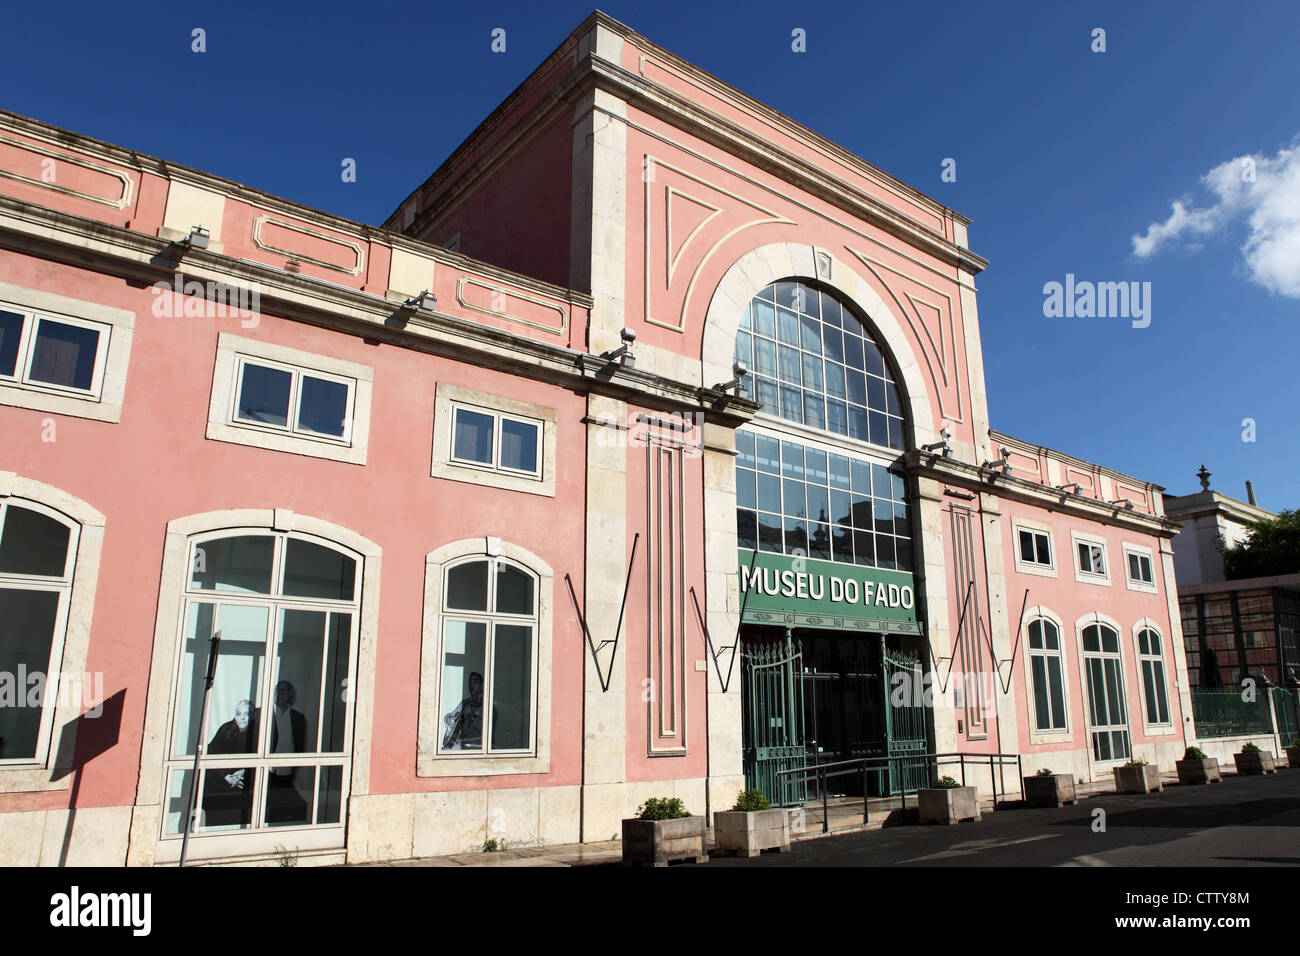 The Museum of Fado (Museu do Fado) in the Alfama district of Lisbon, Portugal. Stock Photo